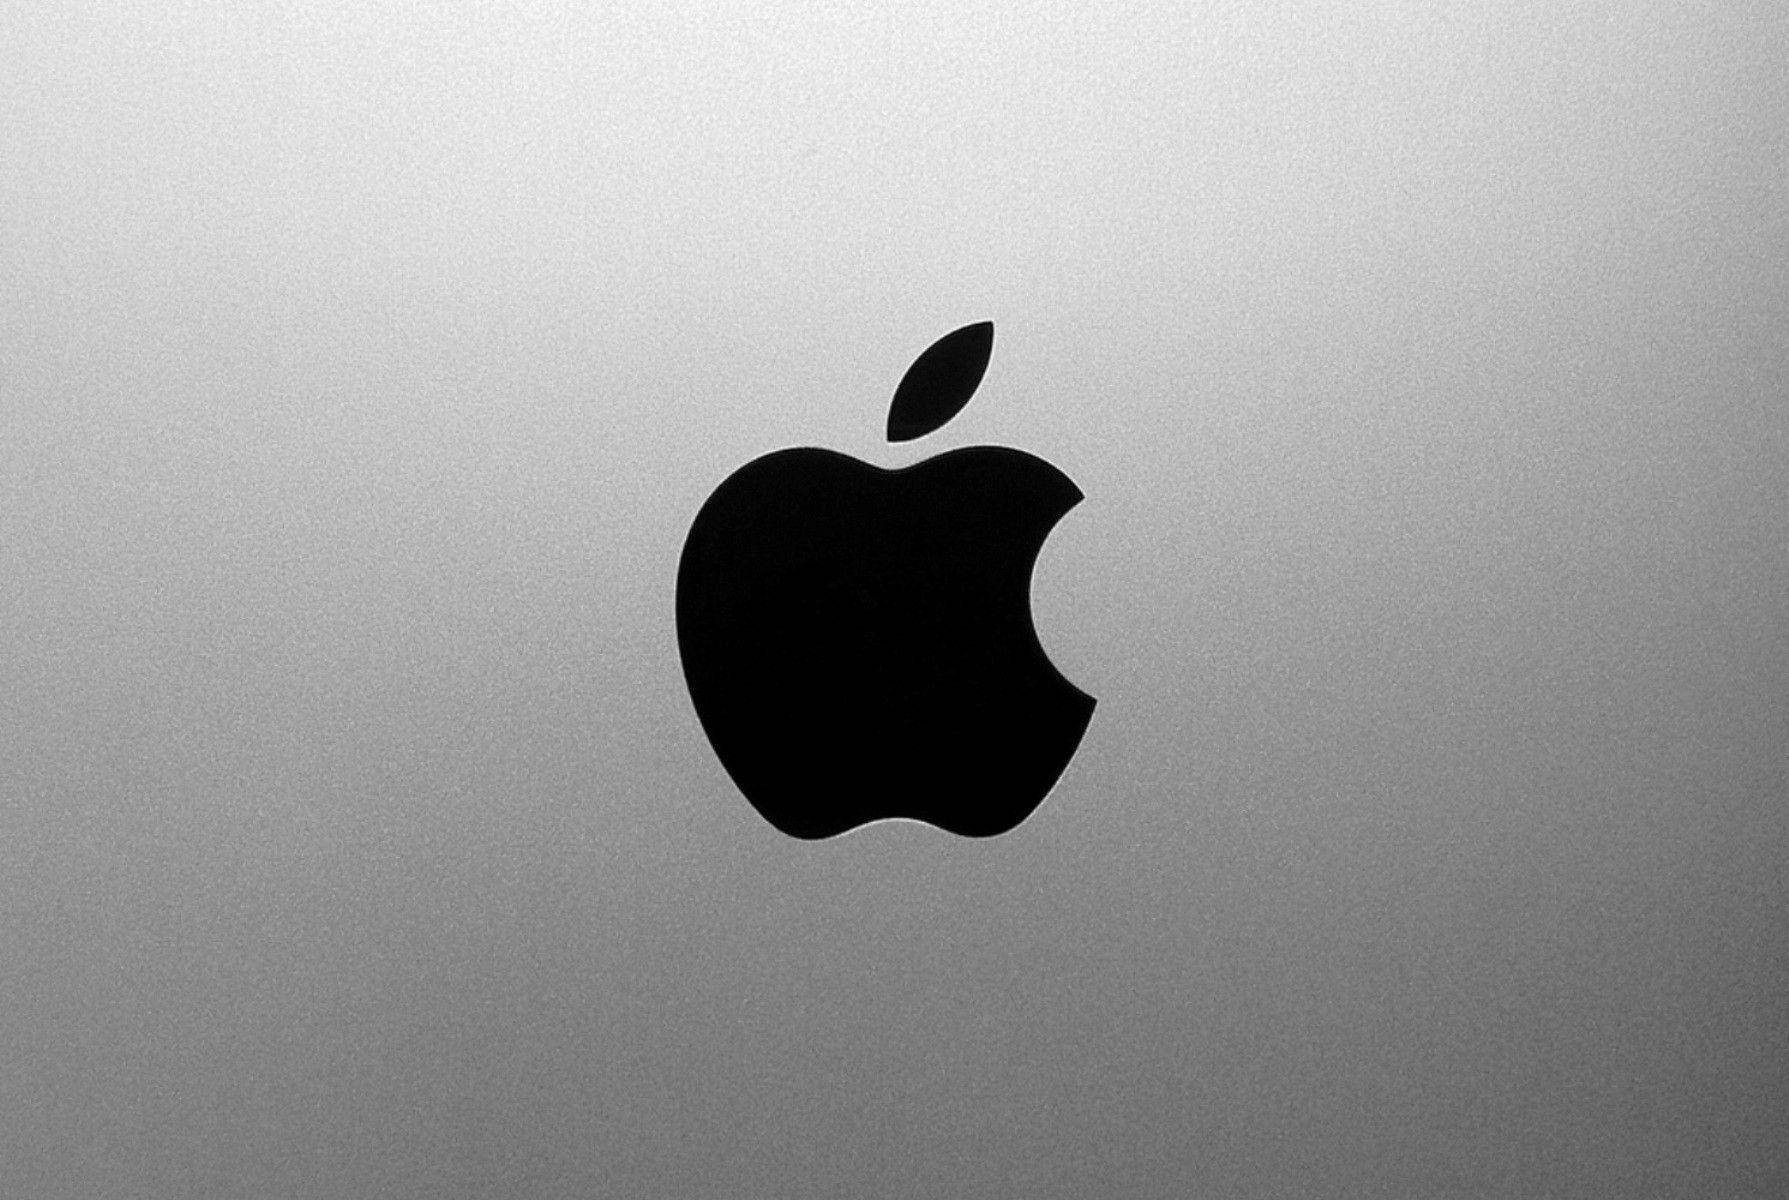 Black Apple Logo 4k Picture